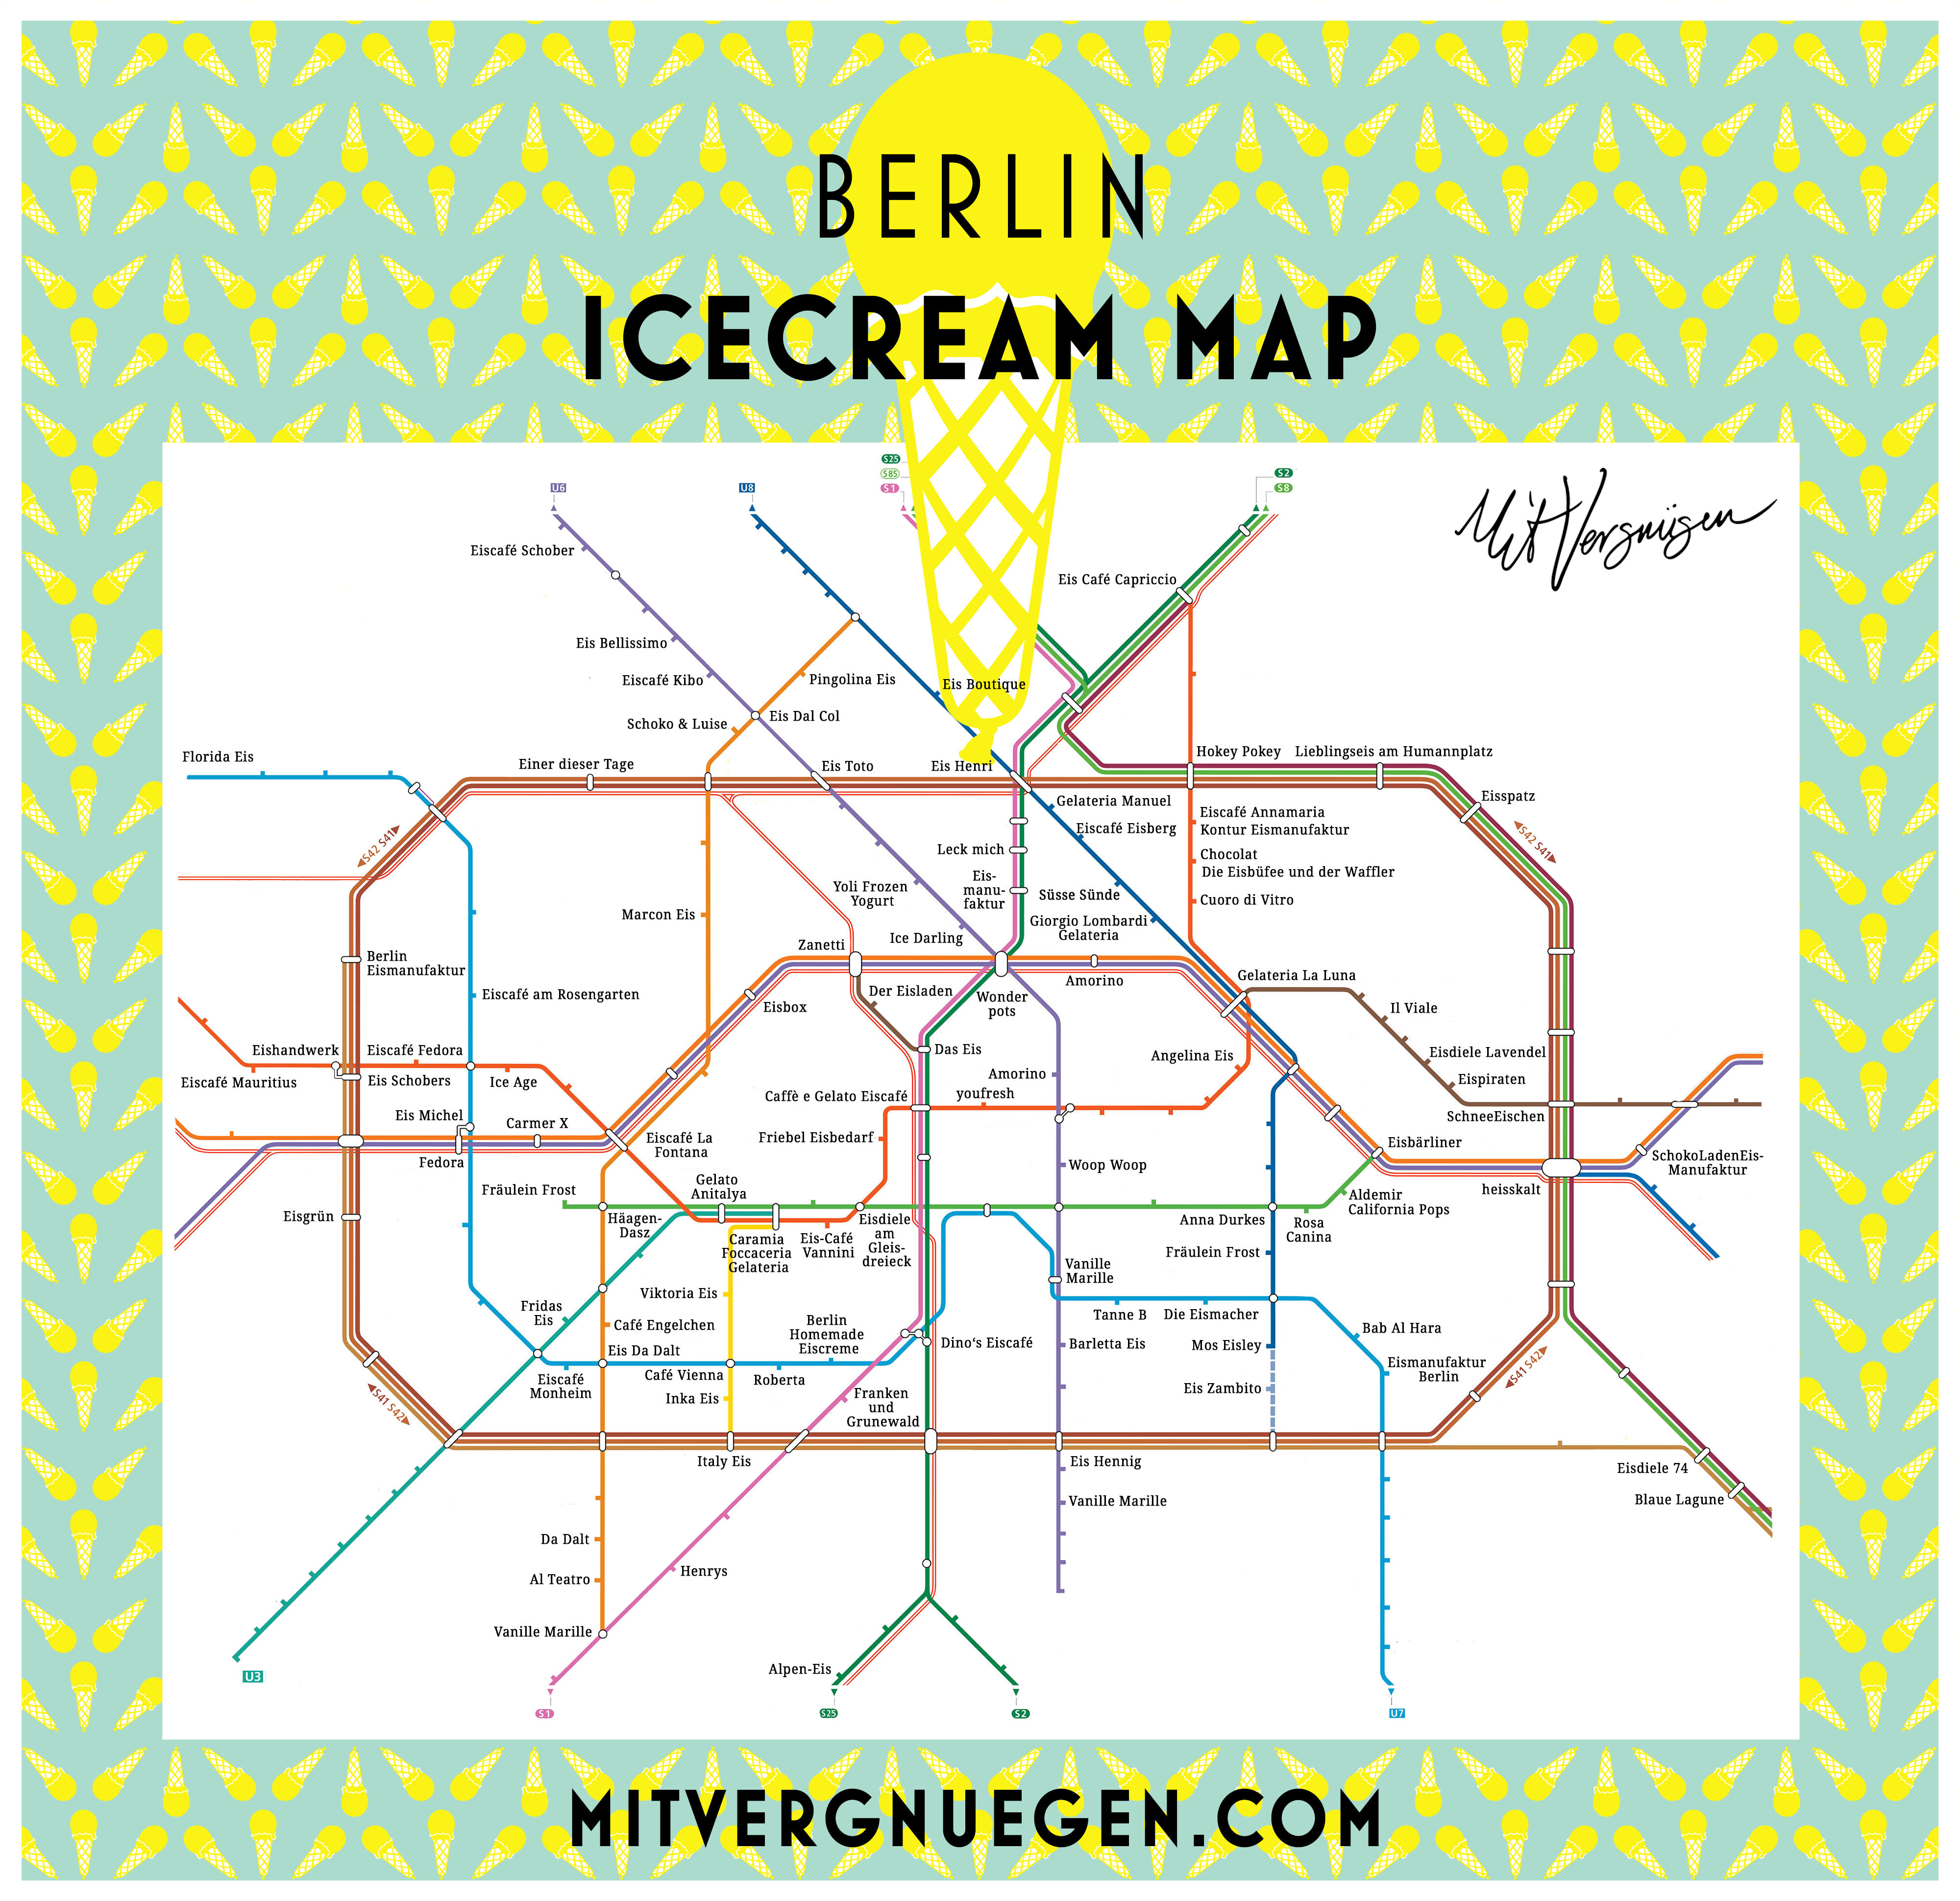 Berlin-Icecream-Map-2016-gruen